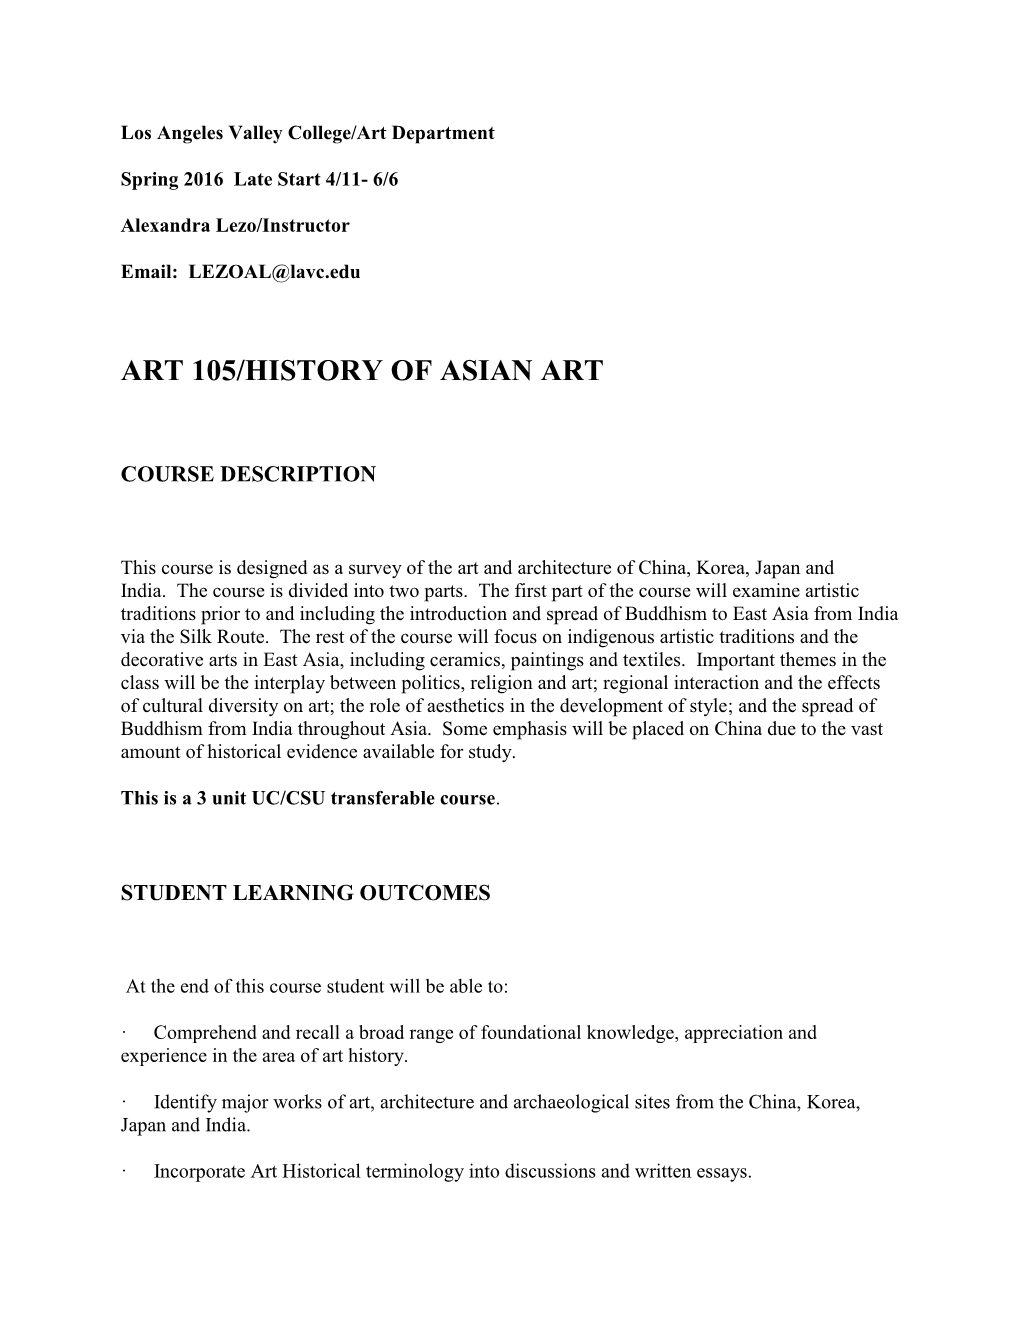 Art 105/History of Asian Art